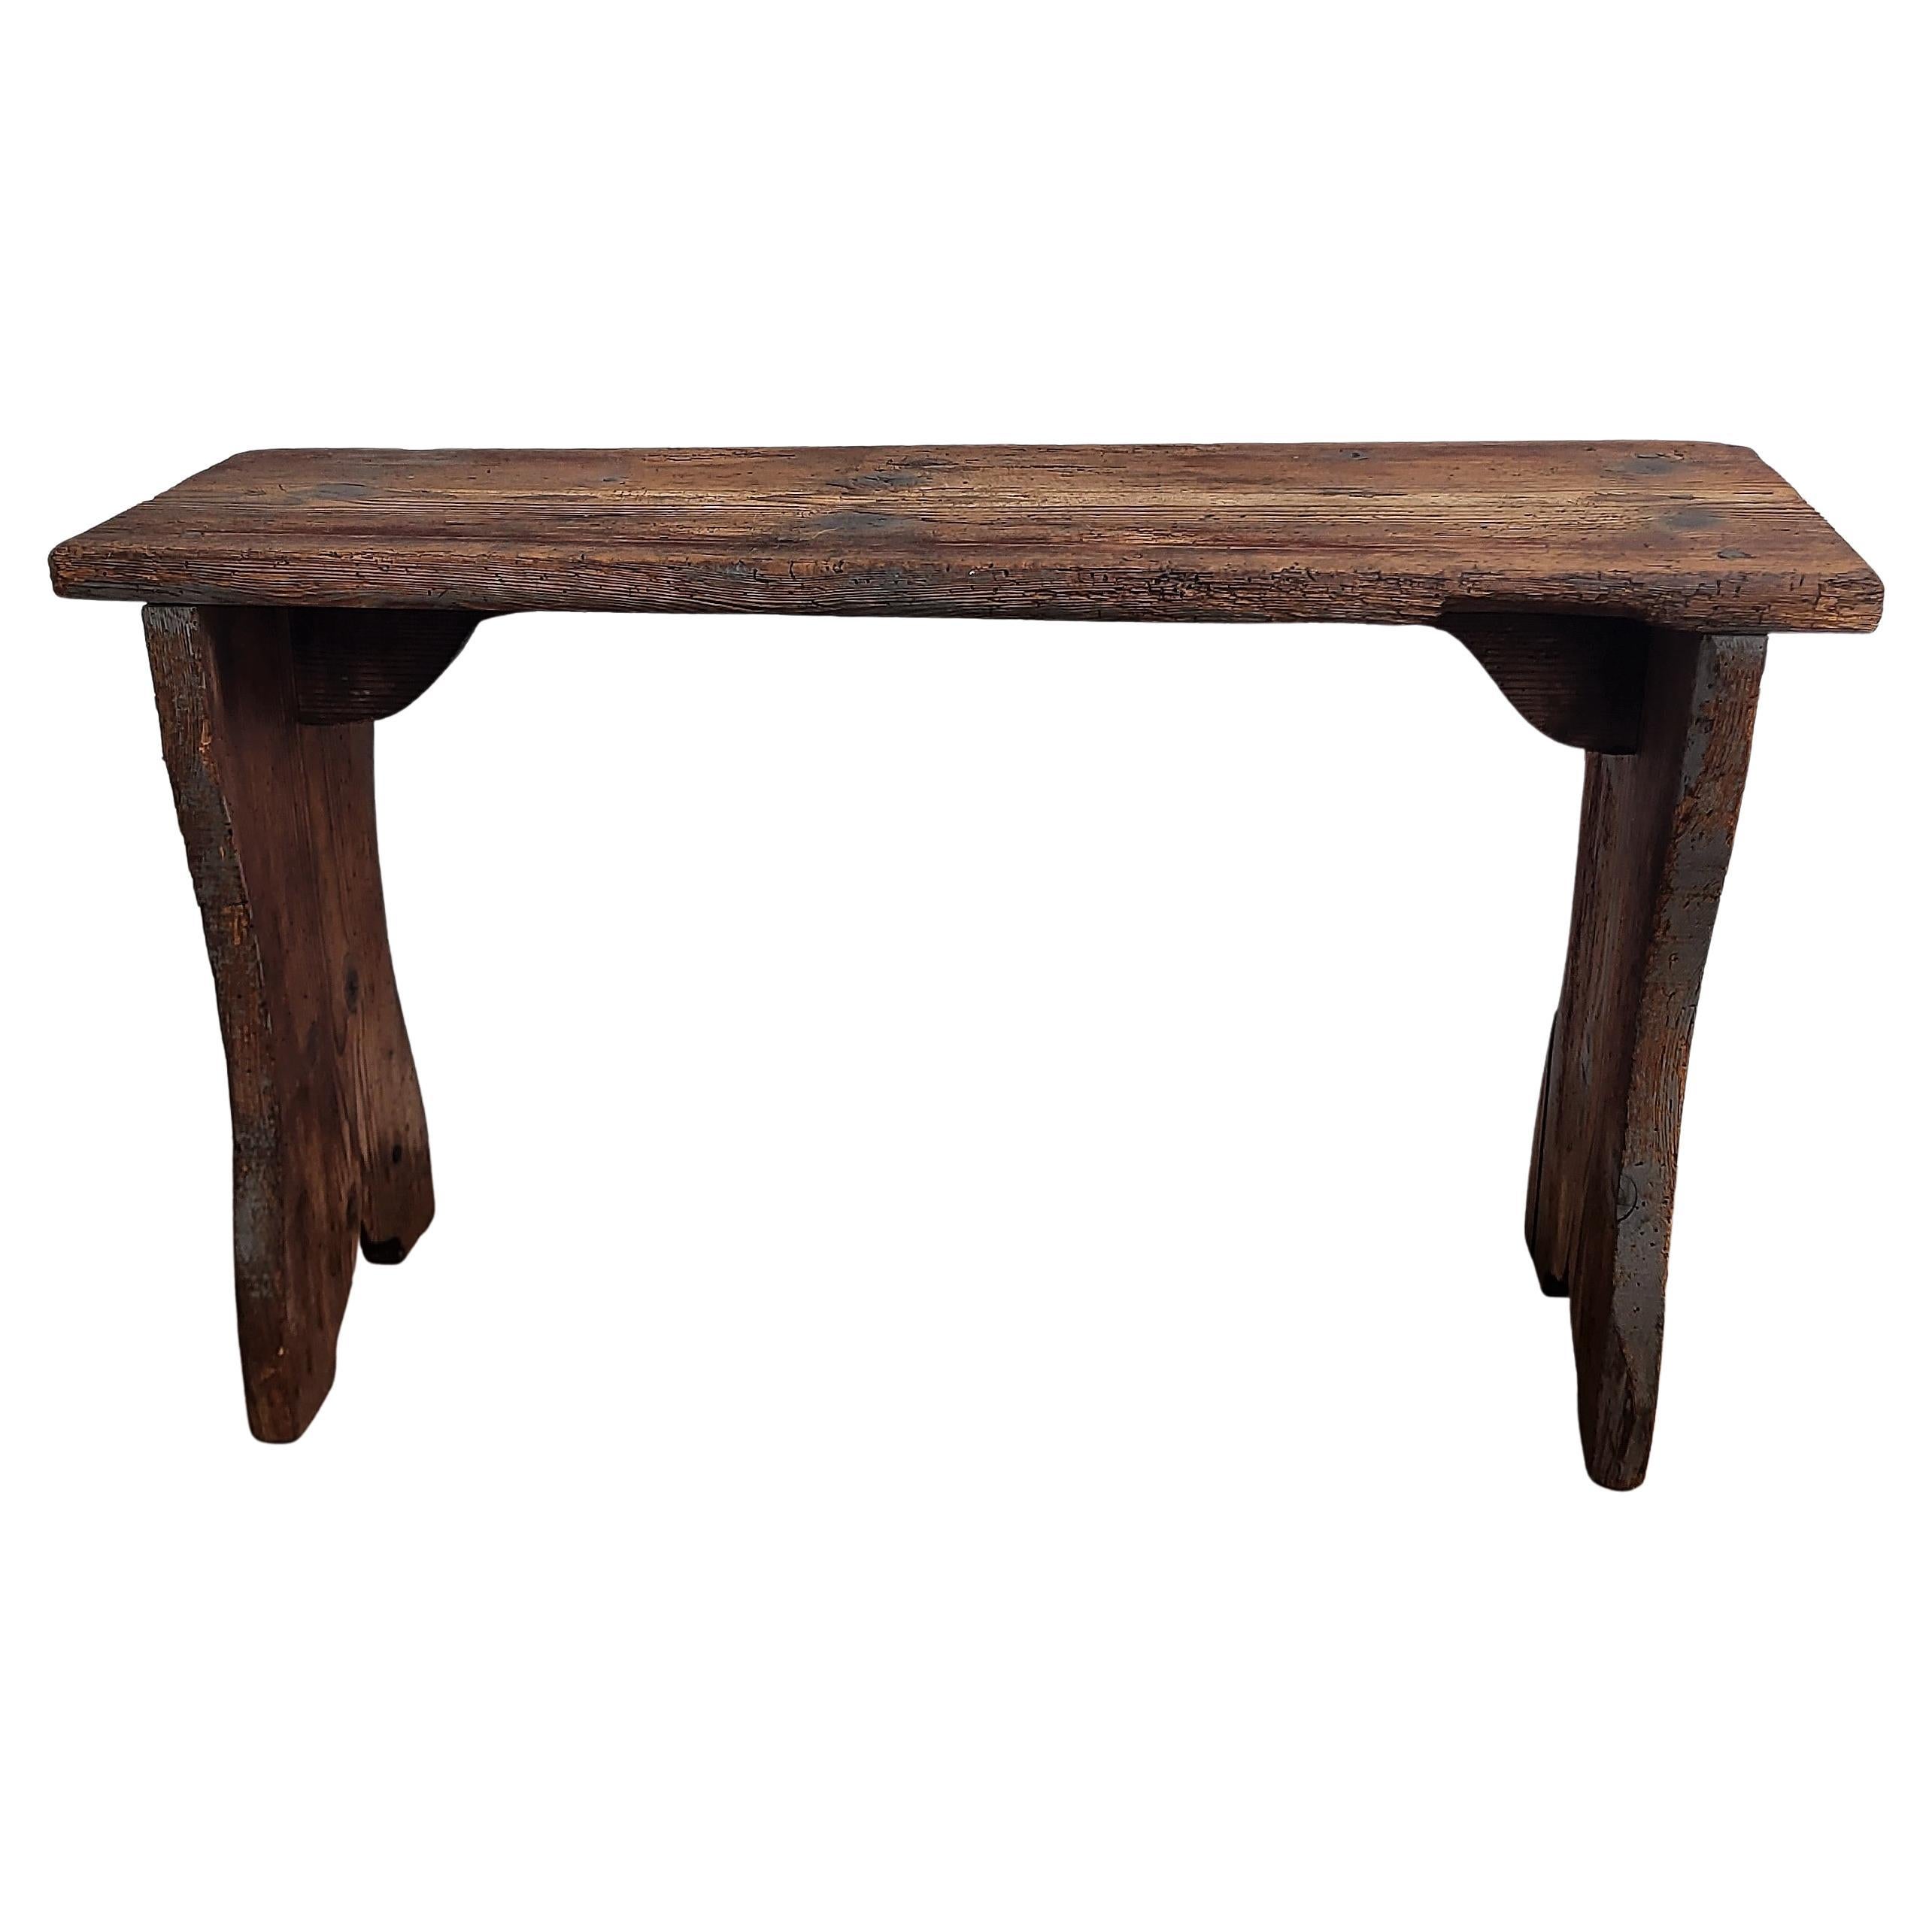 Primitive Rustic Minimal Italian Midcentury Wooden Side Table Bench Stool